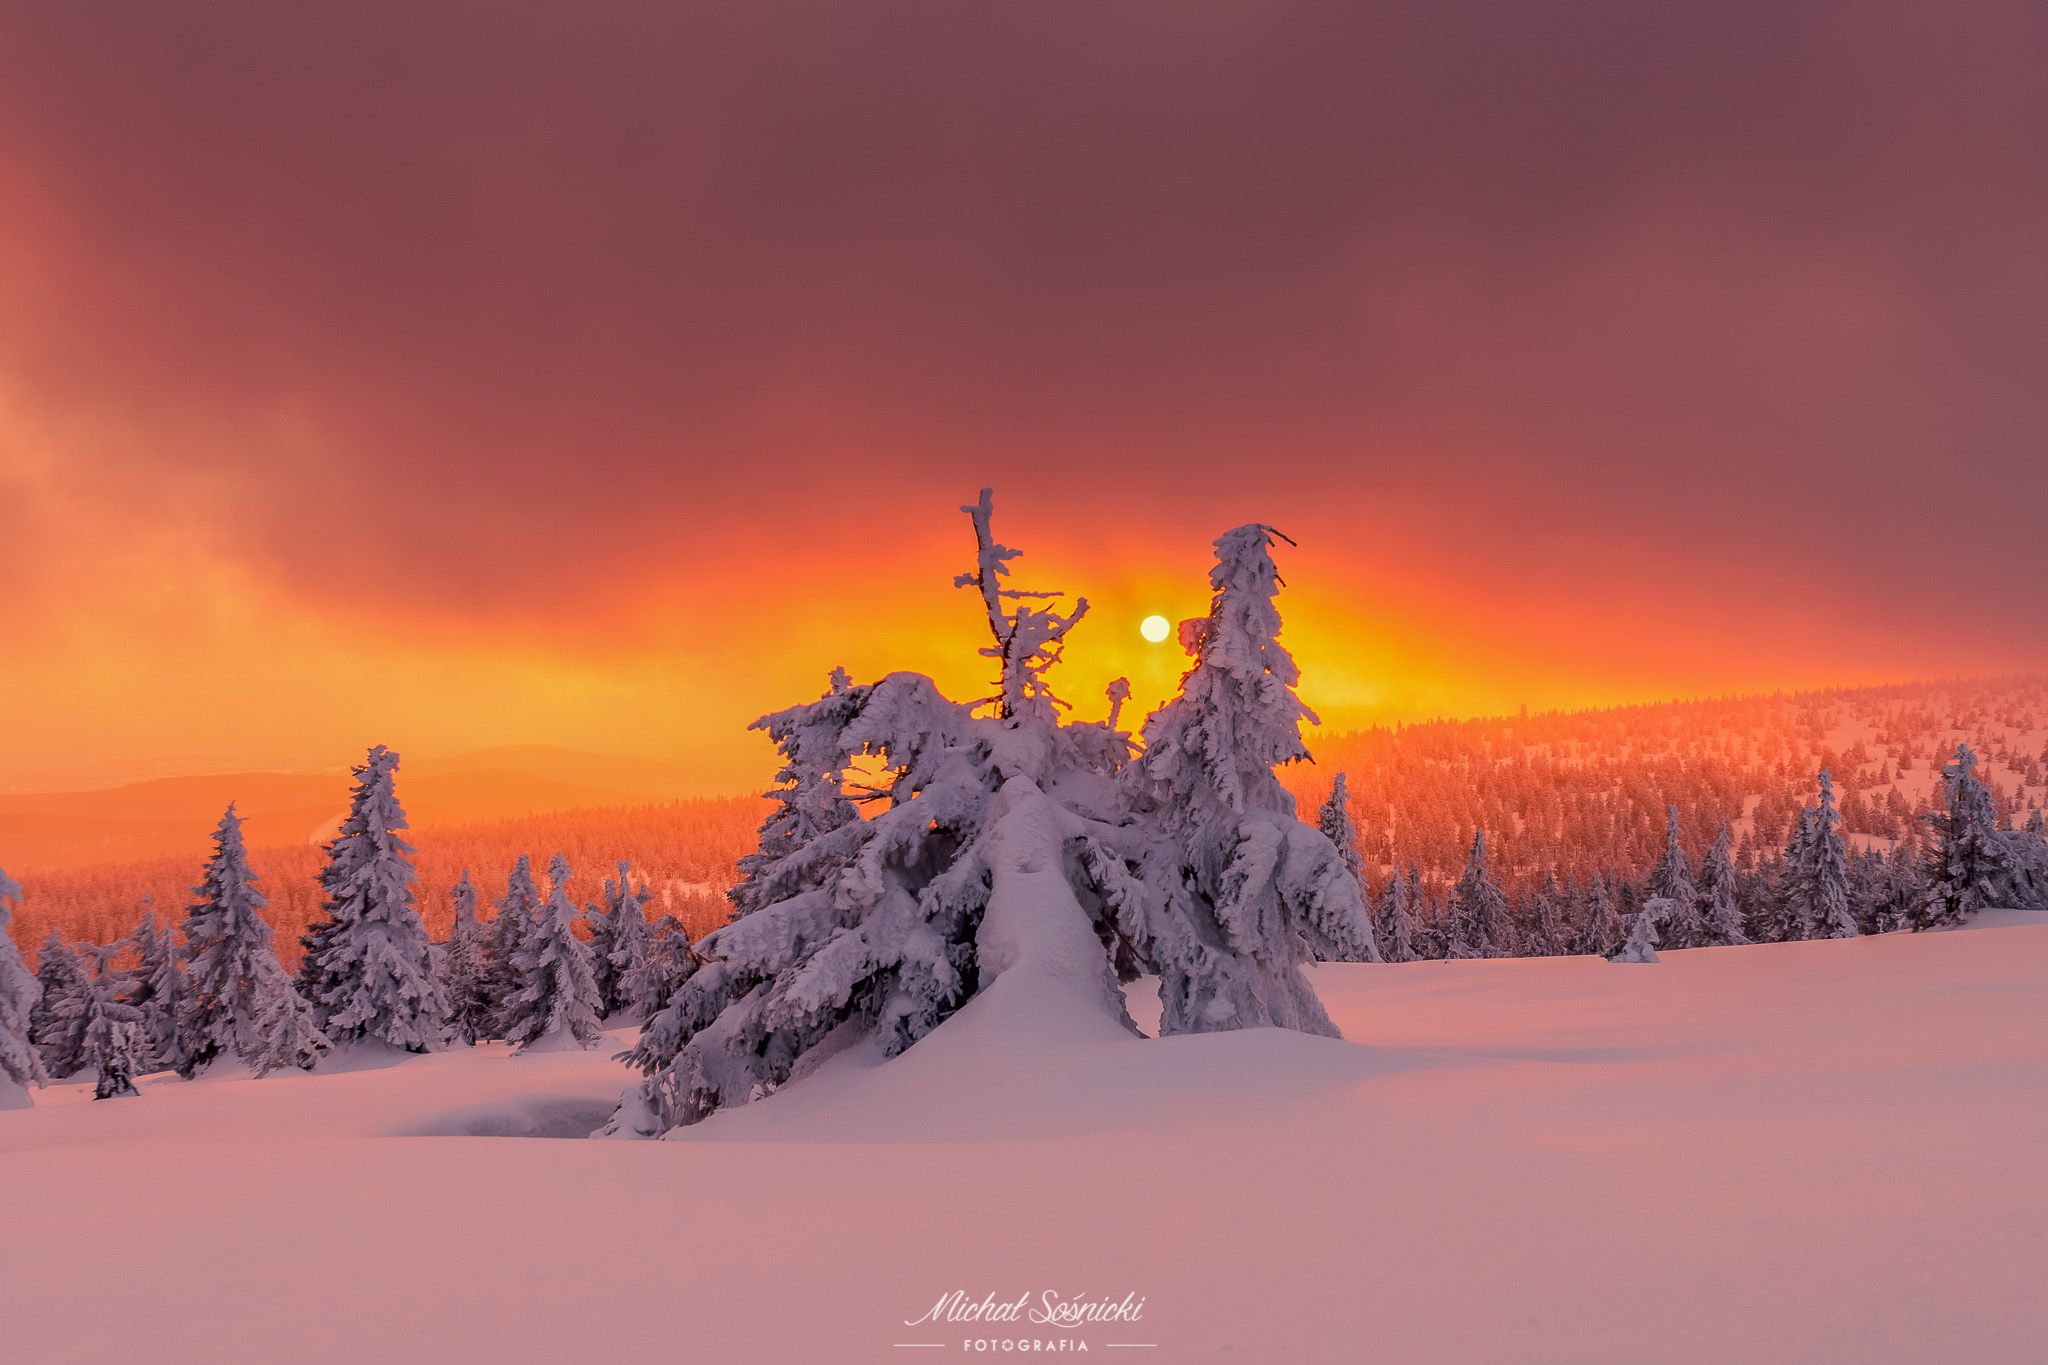 #tree #winter #sunset #sky #wood #nature #amazing #earth #pics #photo #best #poland #pentax #benro #haida, Sośnicki Michał